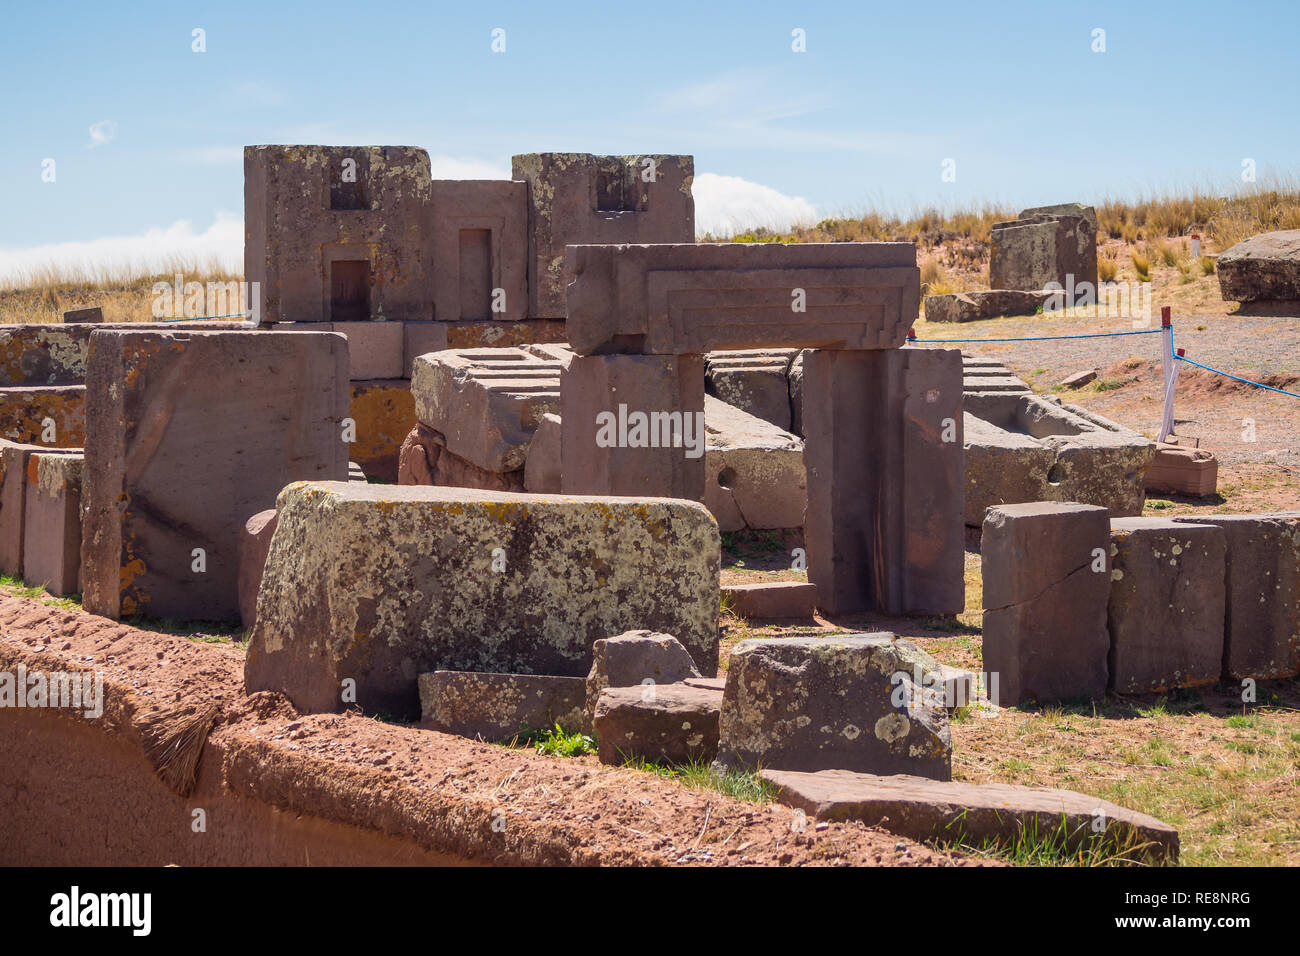 Tiwanaku (Tiahuanaco), Pre-Columbian archaeological site, Bolivia. La Paz Stock Photo